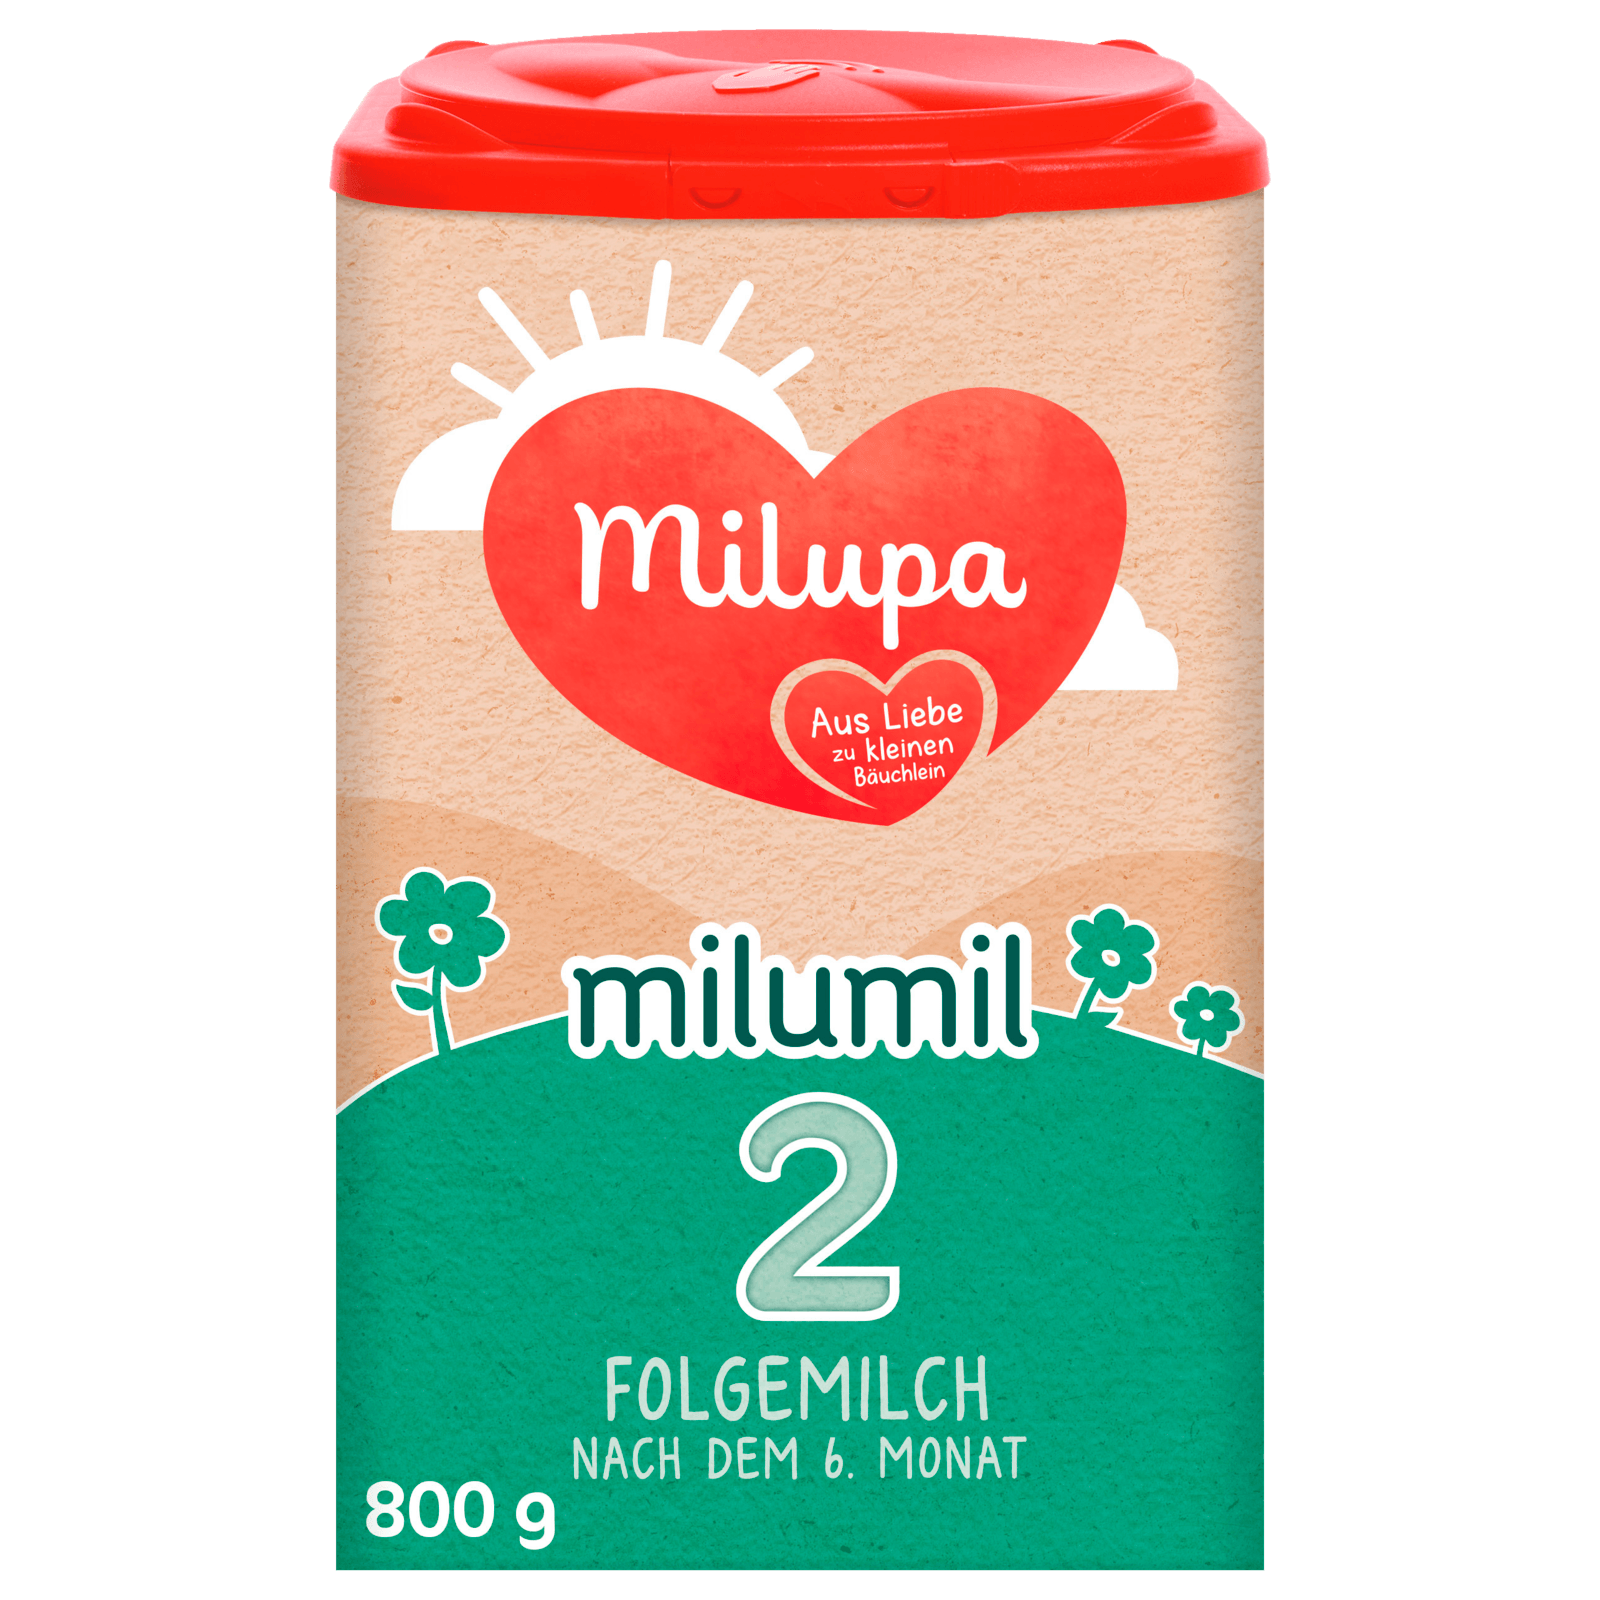 Milupa Milumil 2 Folgemilch, nach dem 6. Monat 800g  für 11.49 EUR